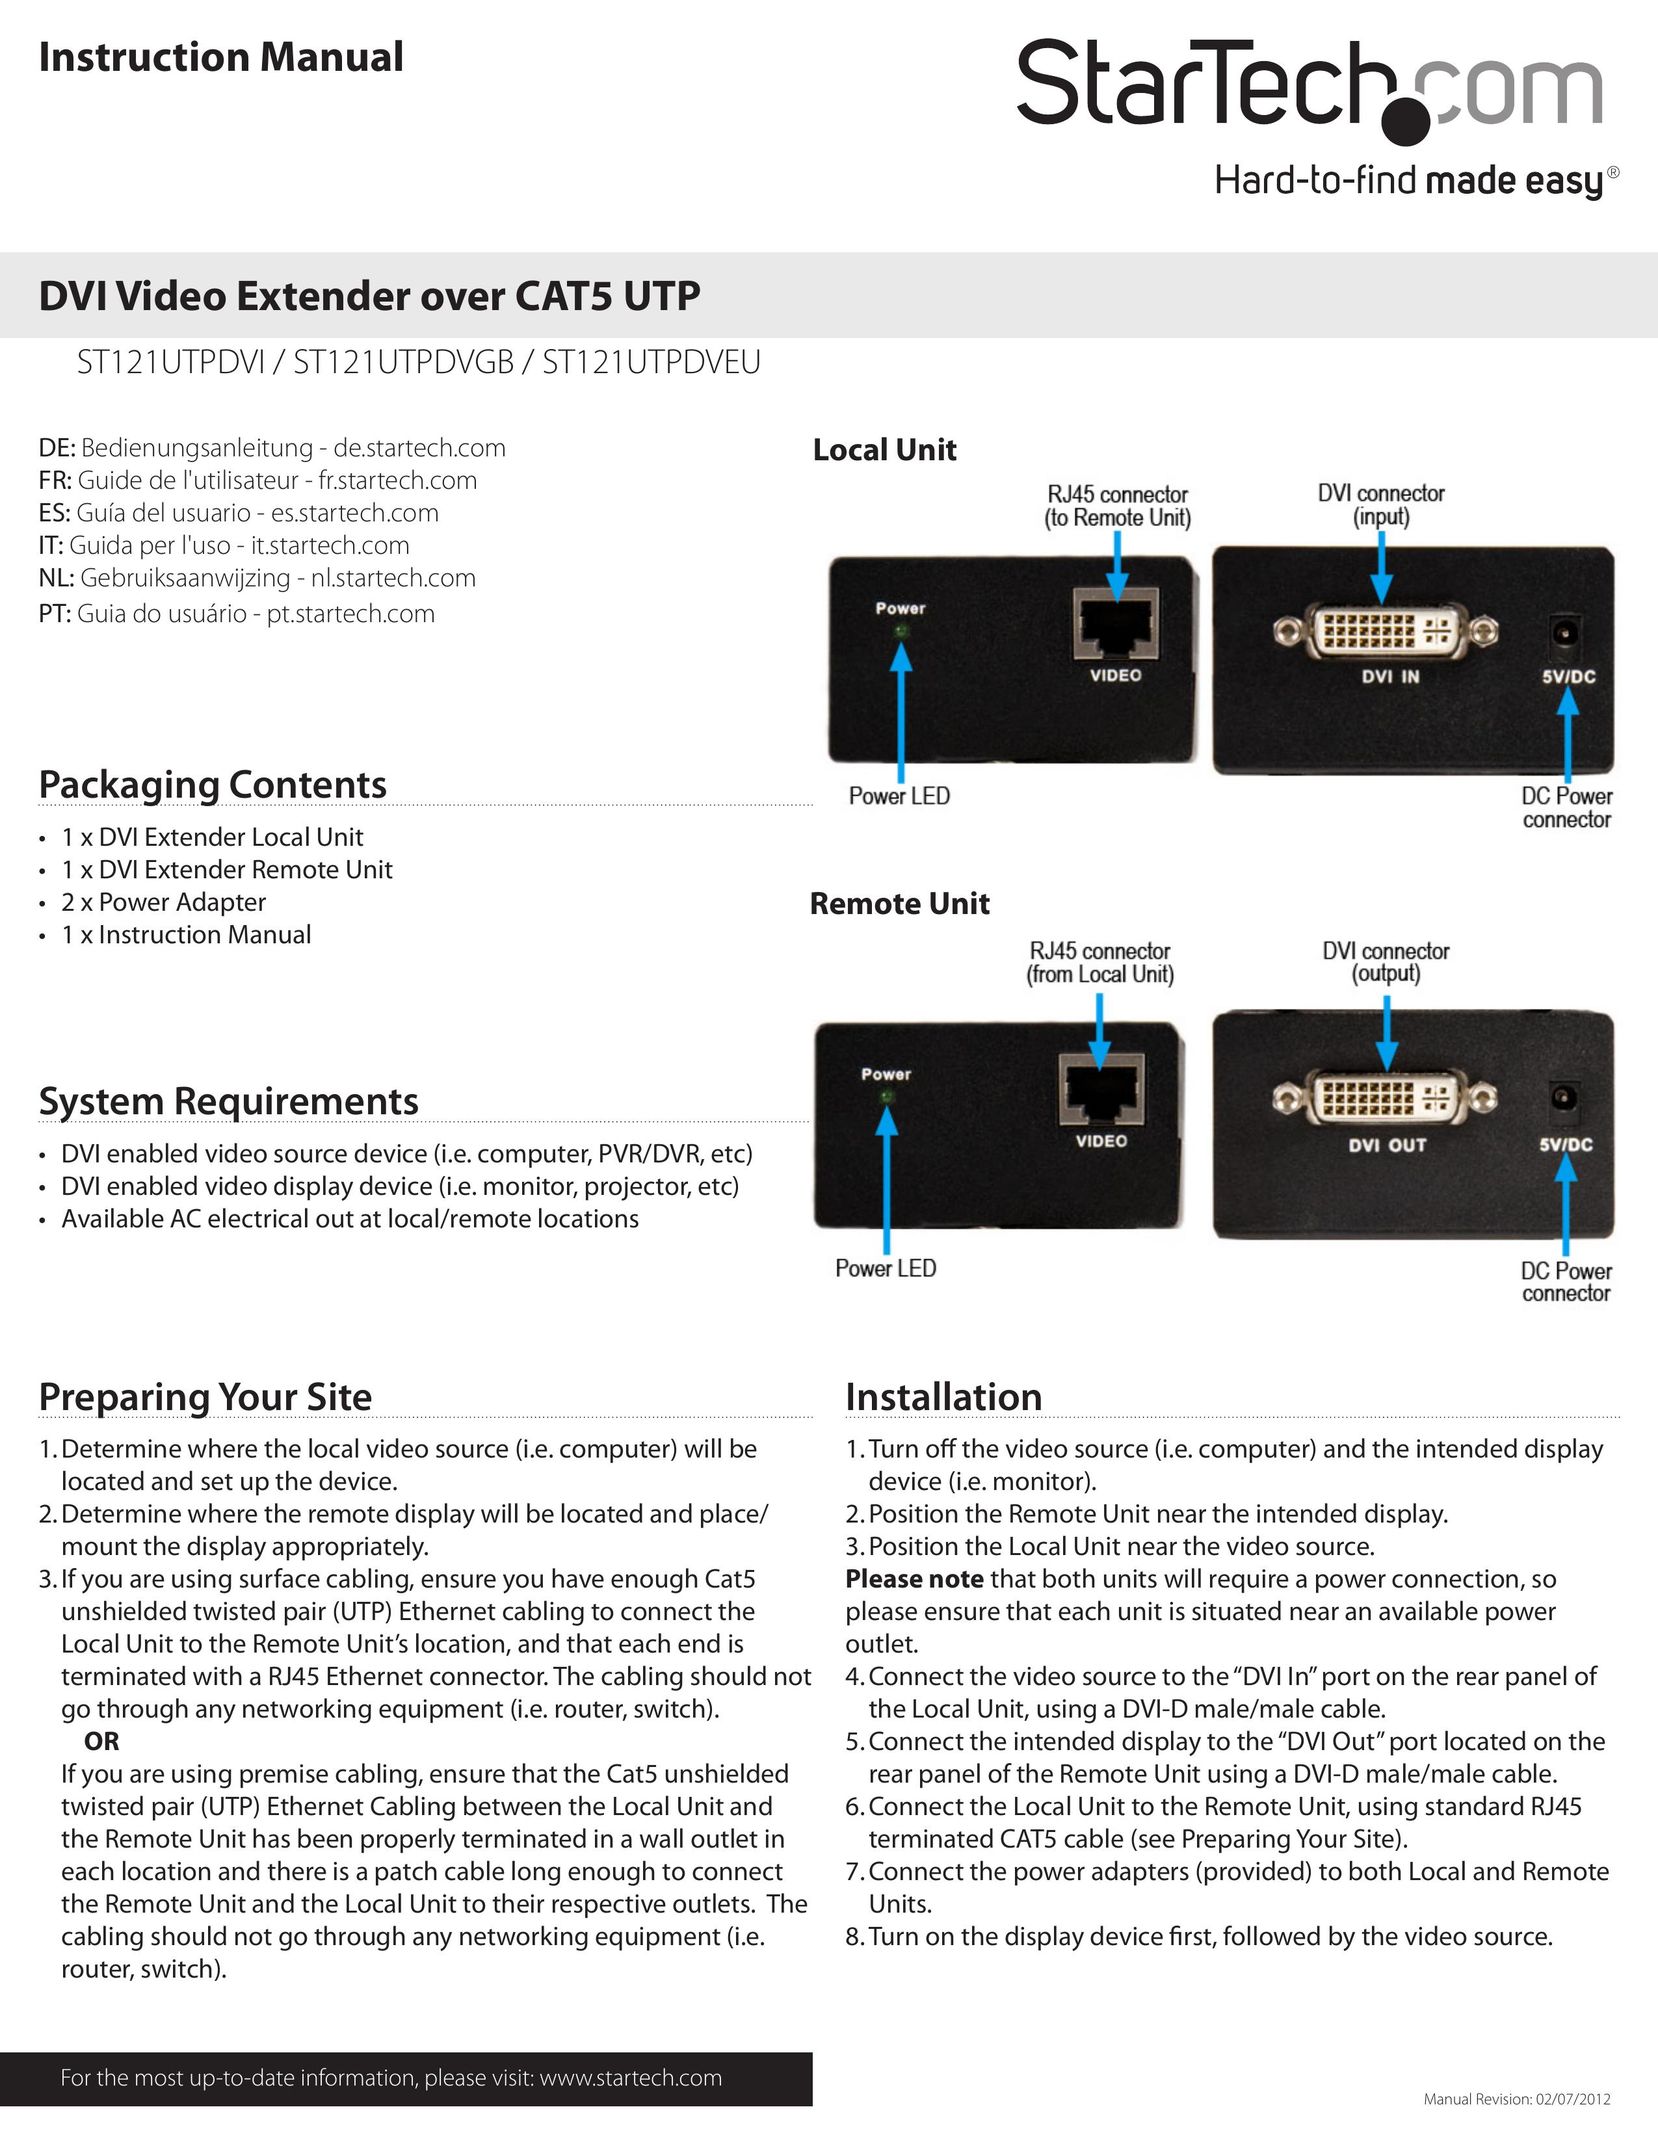 StarTech.com ST121UTPDVGB Cable Box User Manual